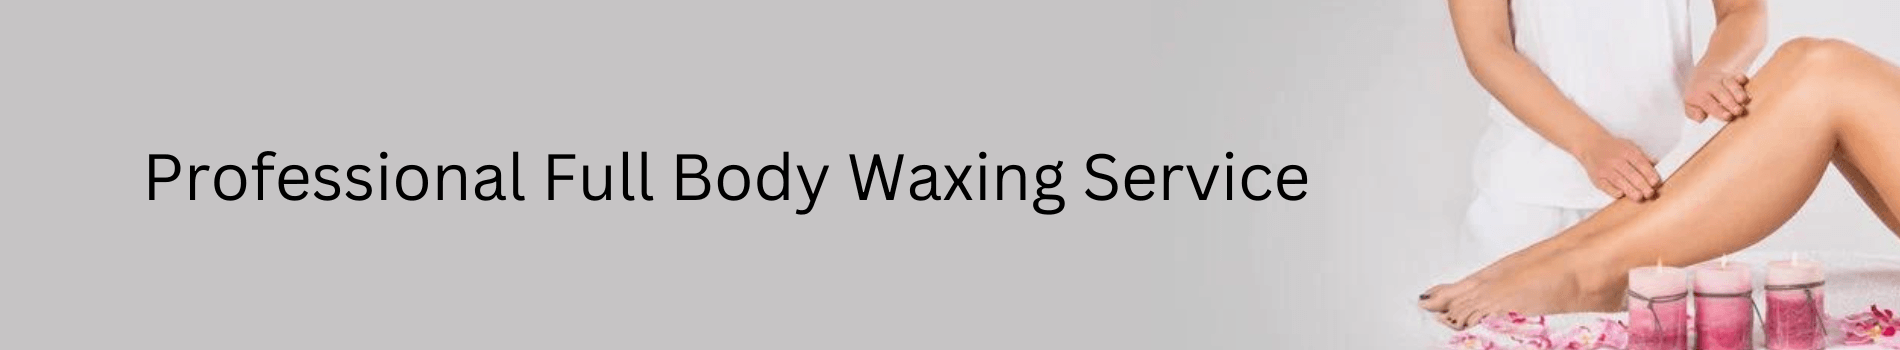 Full body waxing service